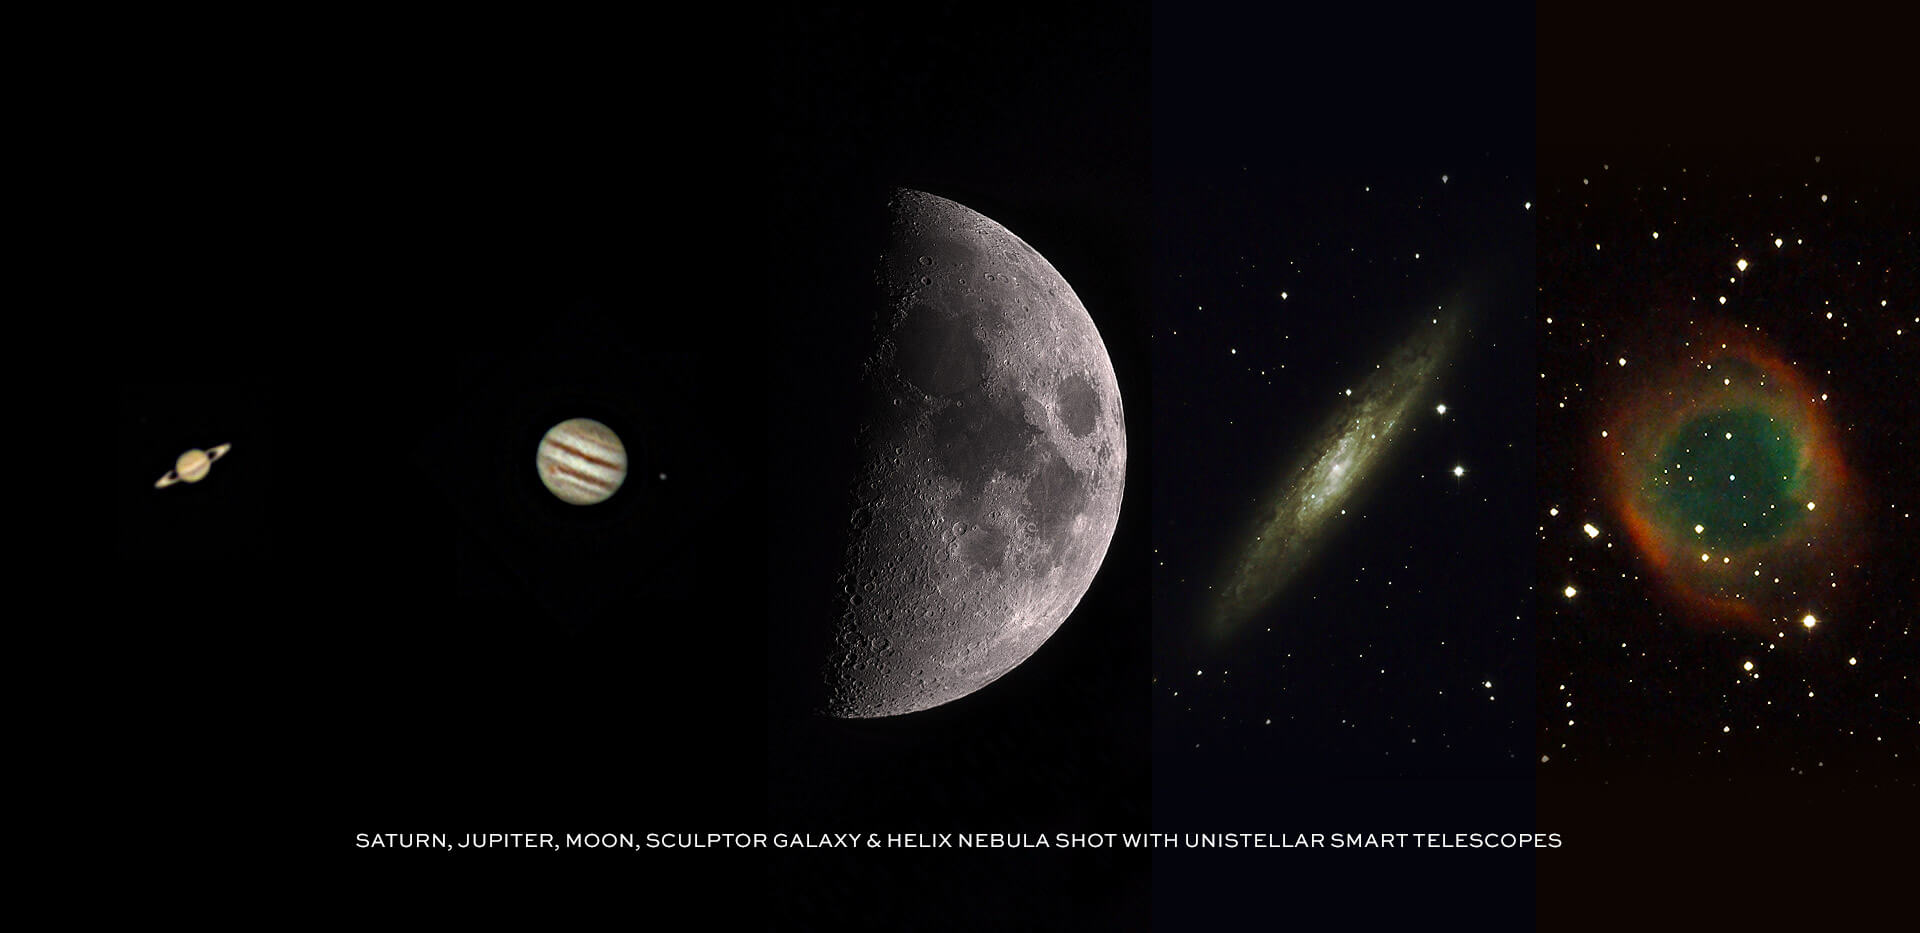 Saturn, Jupiter, Moon, sculptor Galaxy & Helix Nebula shot with UNISTELLAR Smart Telescopes